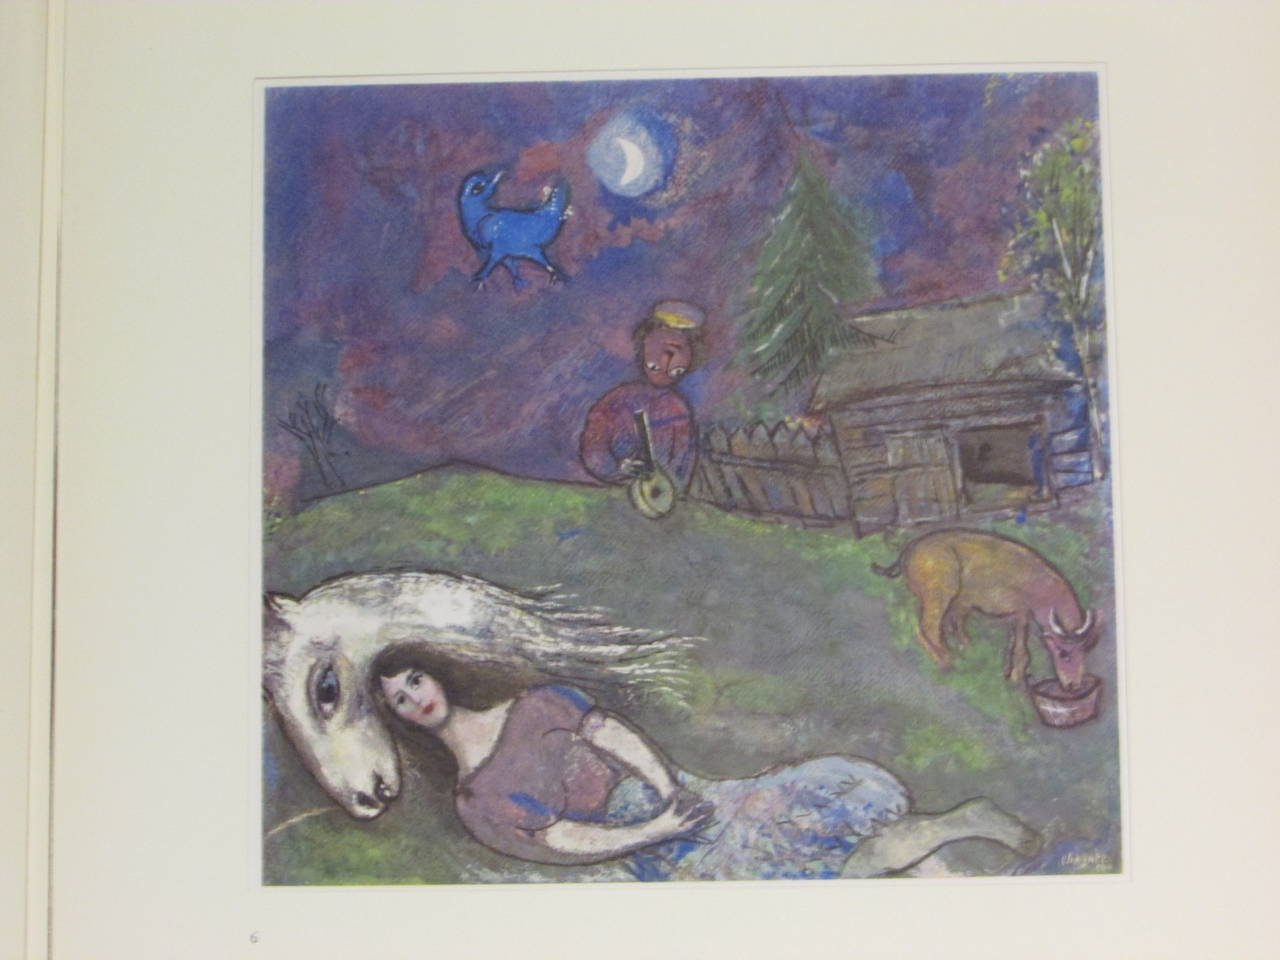 Marc Chagall Gouaches - Limited Edition in Facsimile - Portfolio Book 3